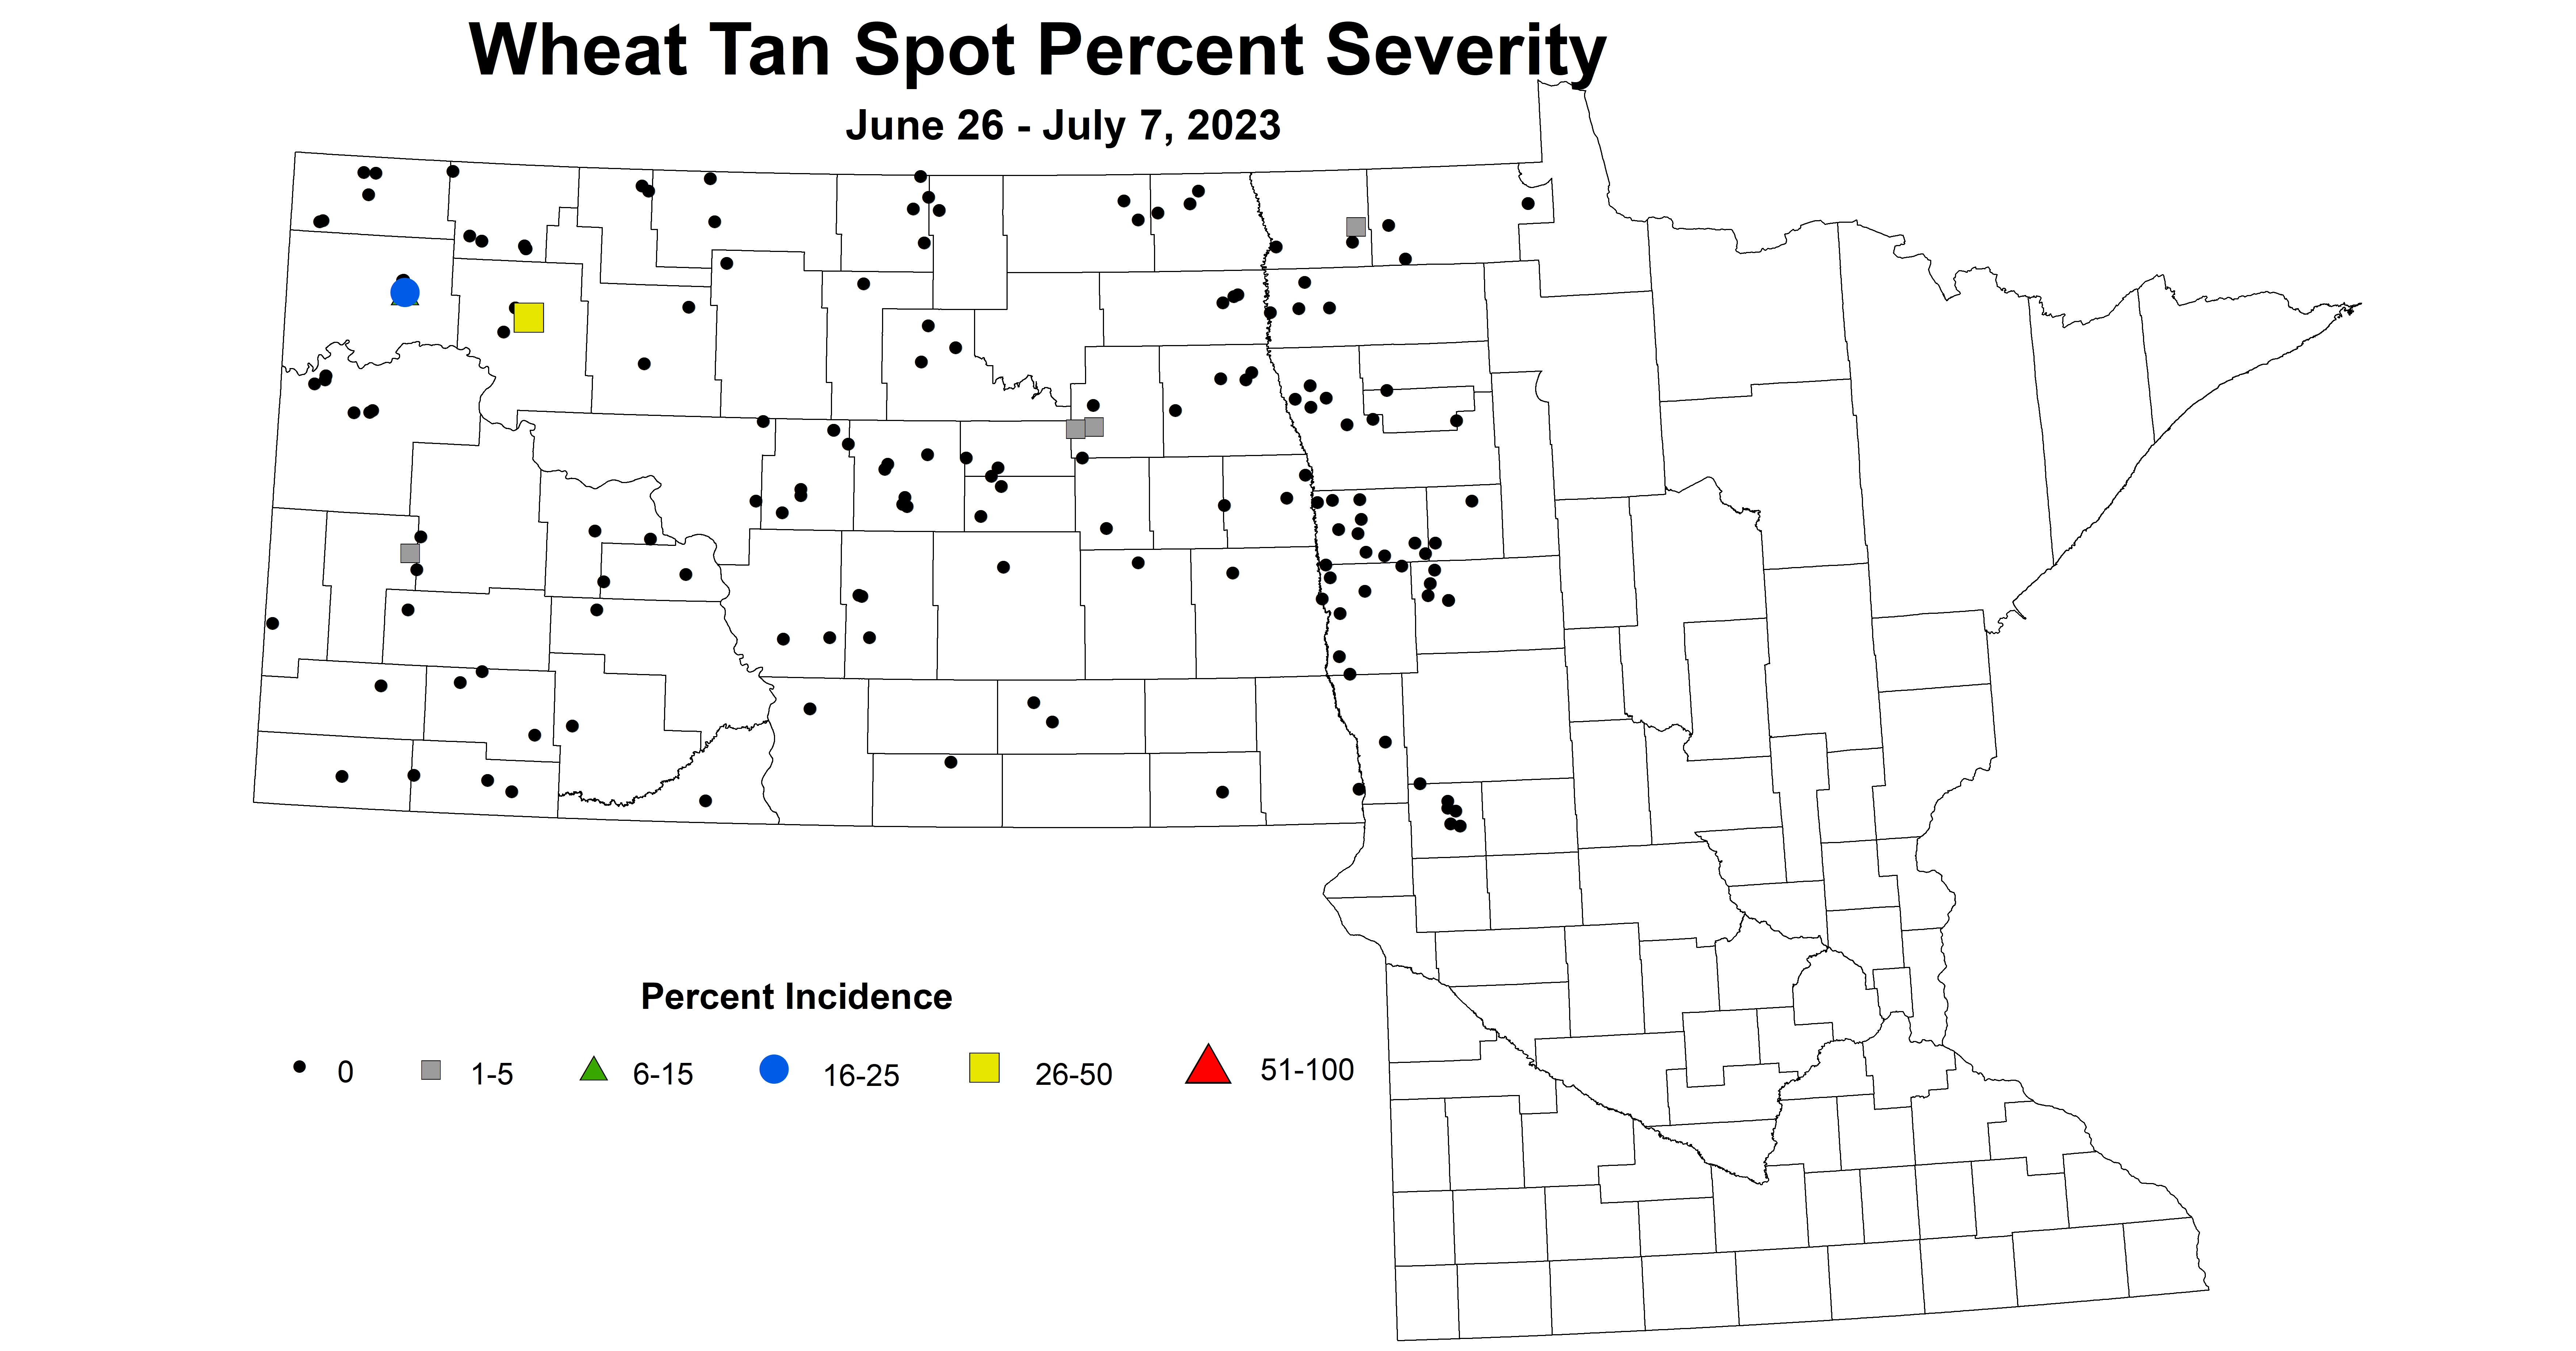 wheat tan spot severity June 26 - July 7 2023